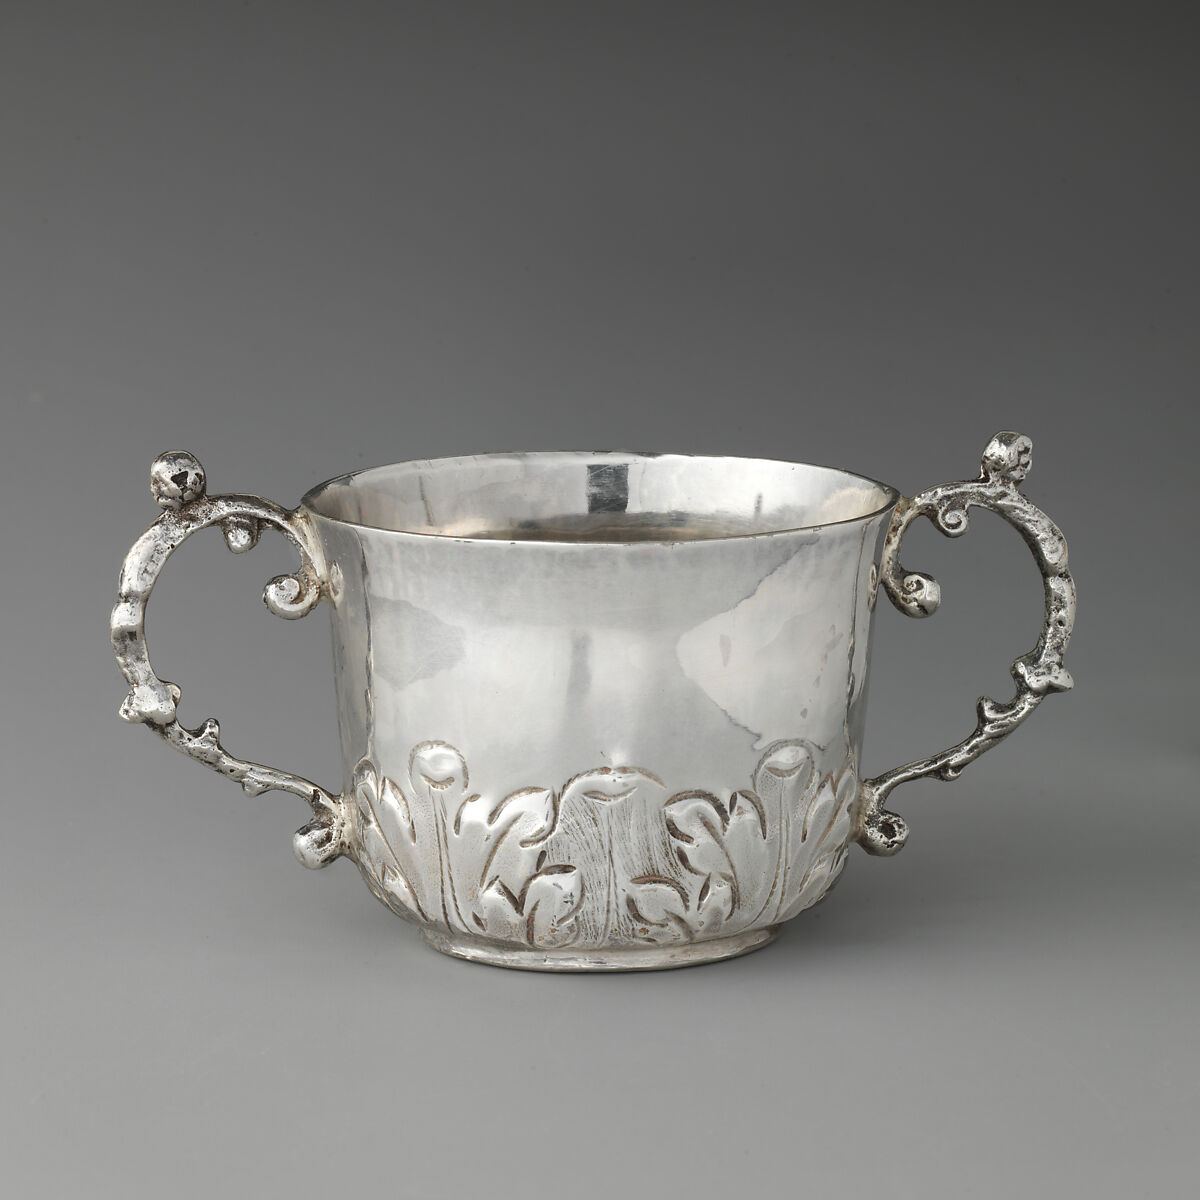 Miniature child's caudle cup, S H (British, mid 17th century), Silver, British, London 